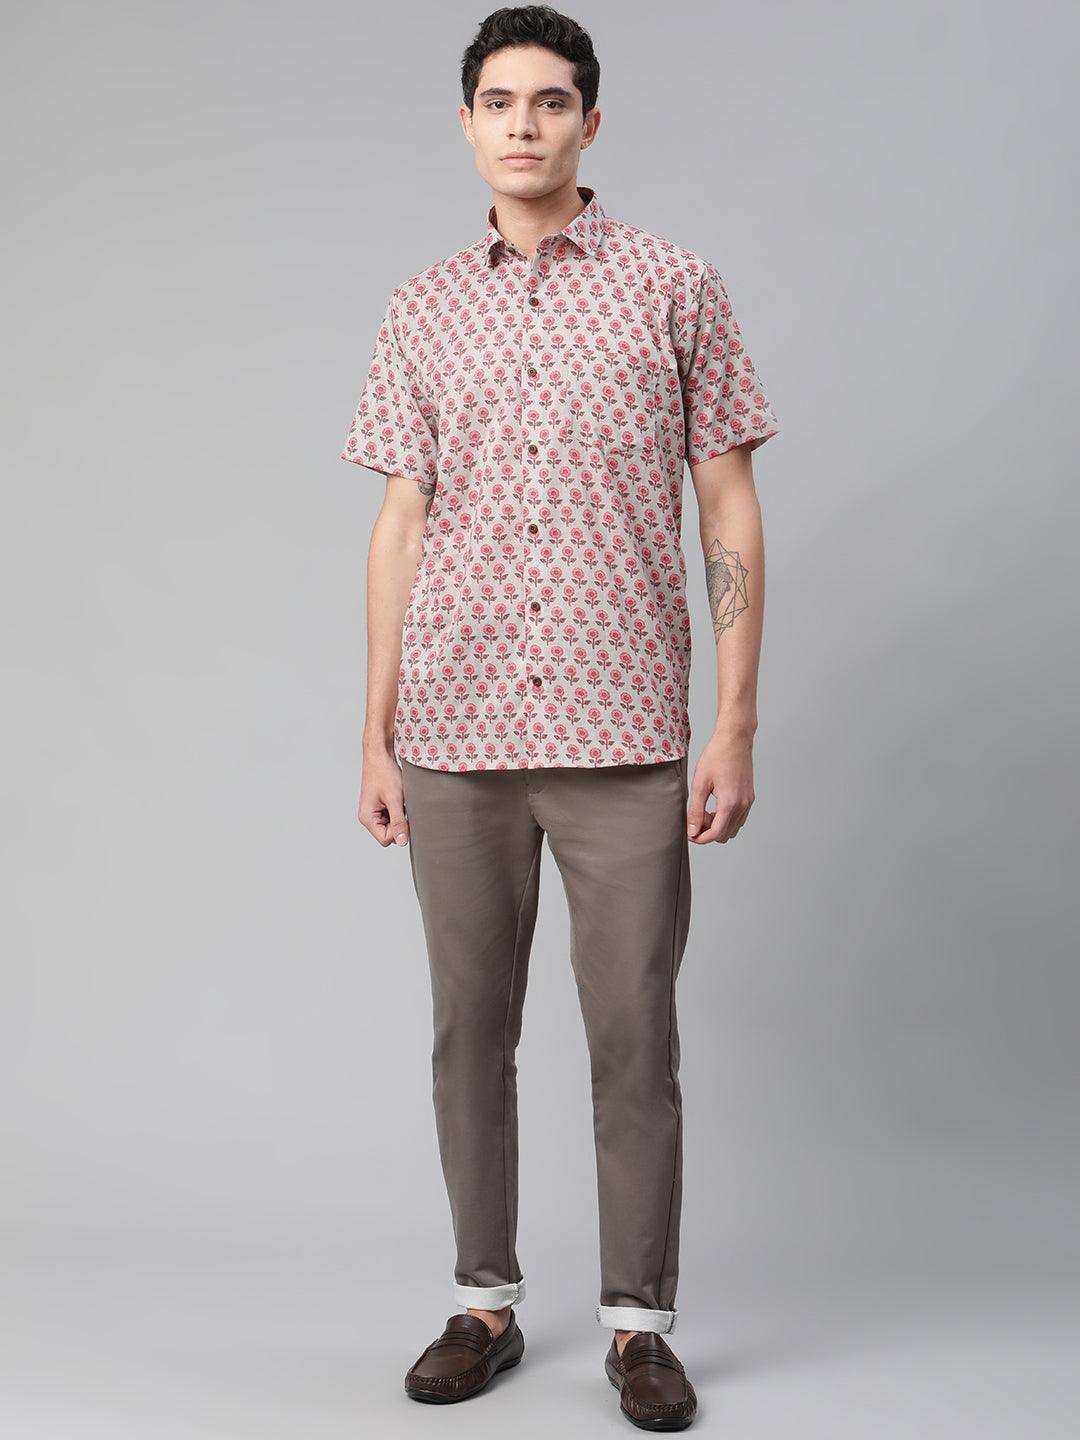 Millennial Men Grey & Pink Cotton  Half Sleeve Shirt for Men-MMH0174 - divenaworld.com